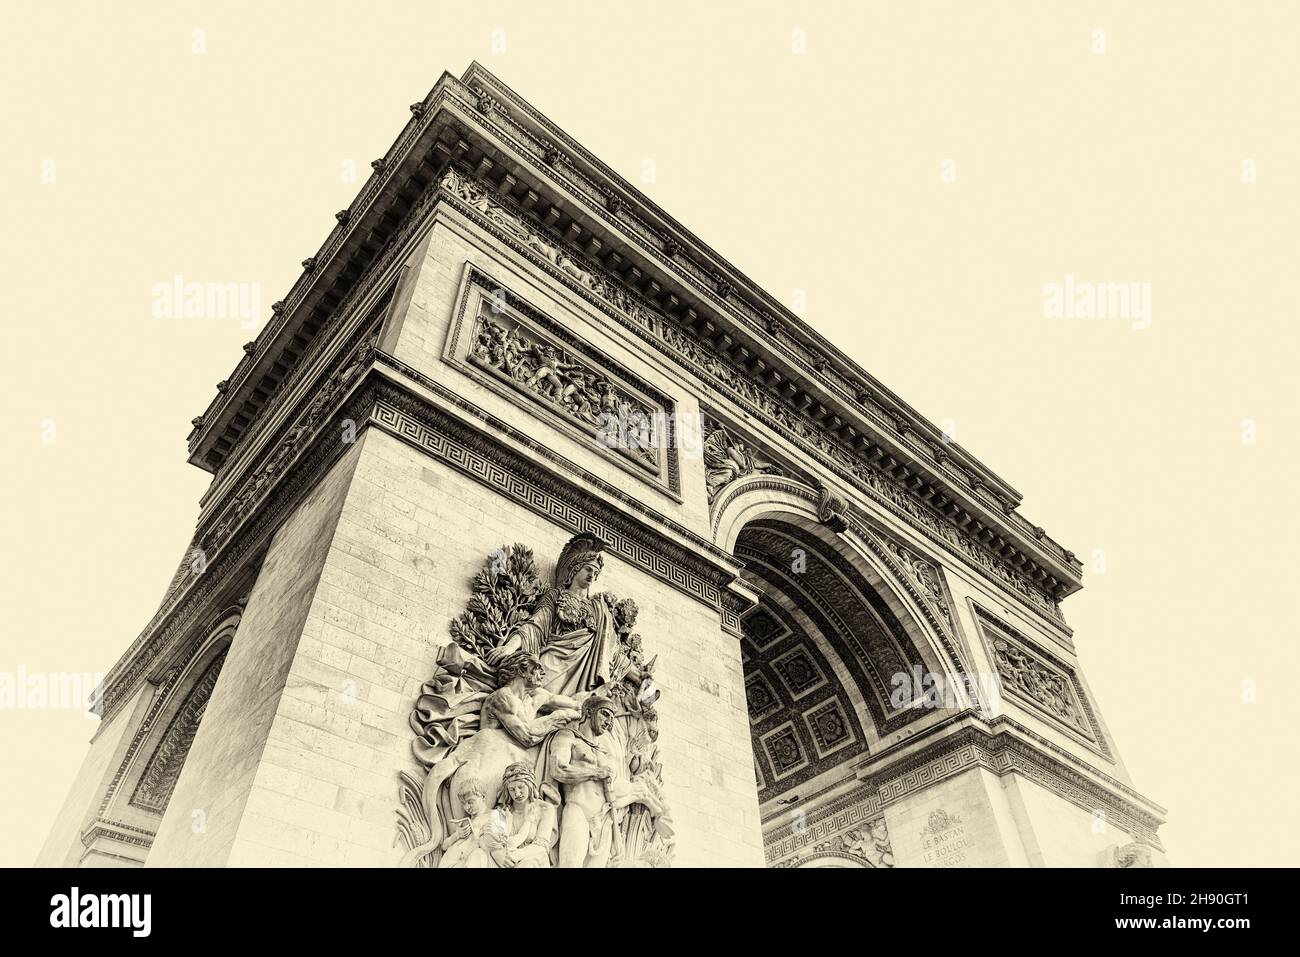 Famoso 'Arco del triunfo' (Arco de la victoria) monumento francés, París, Francia.Película antigua filtrada Foto de stock